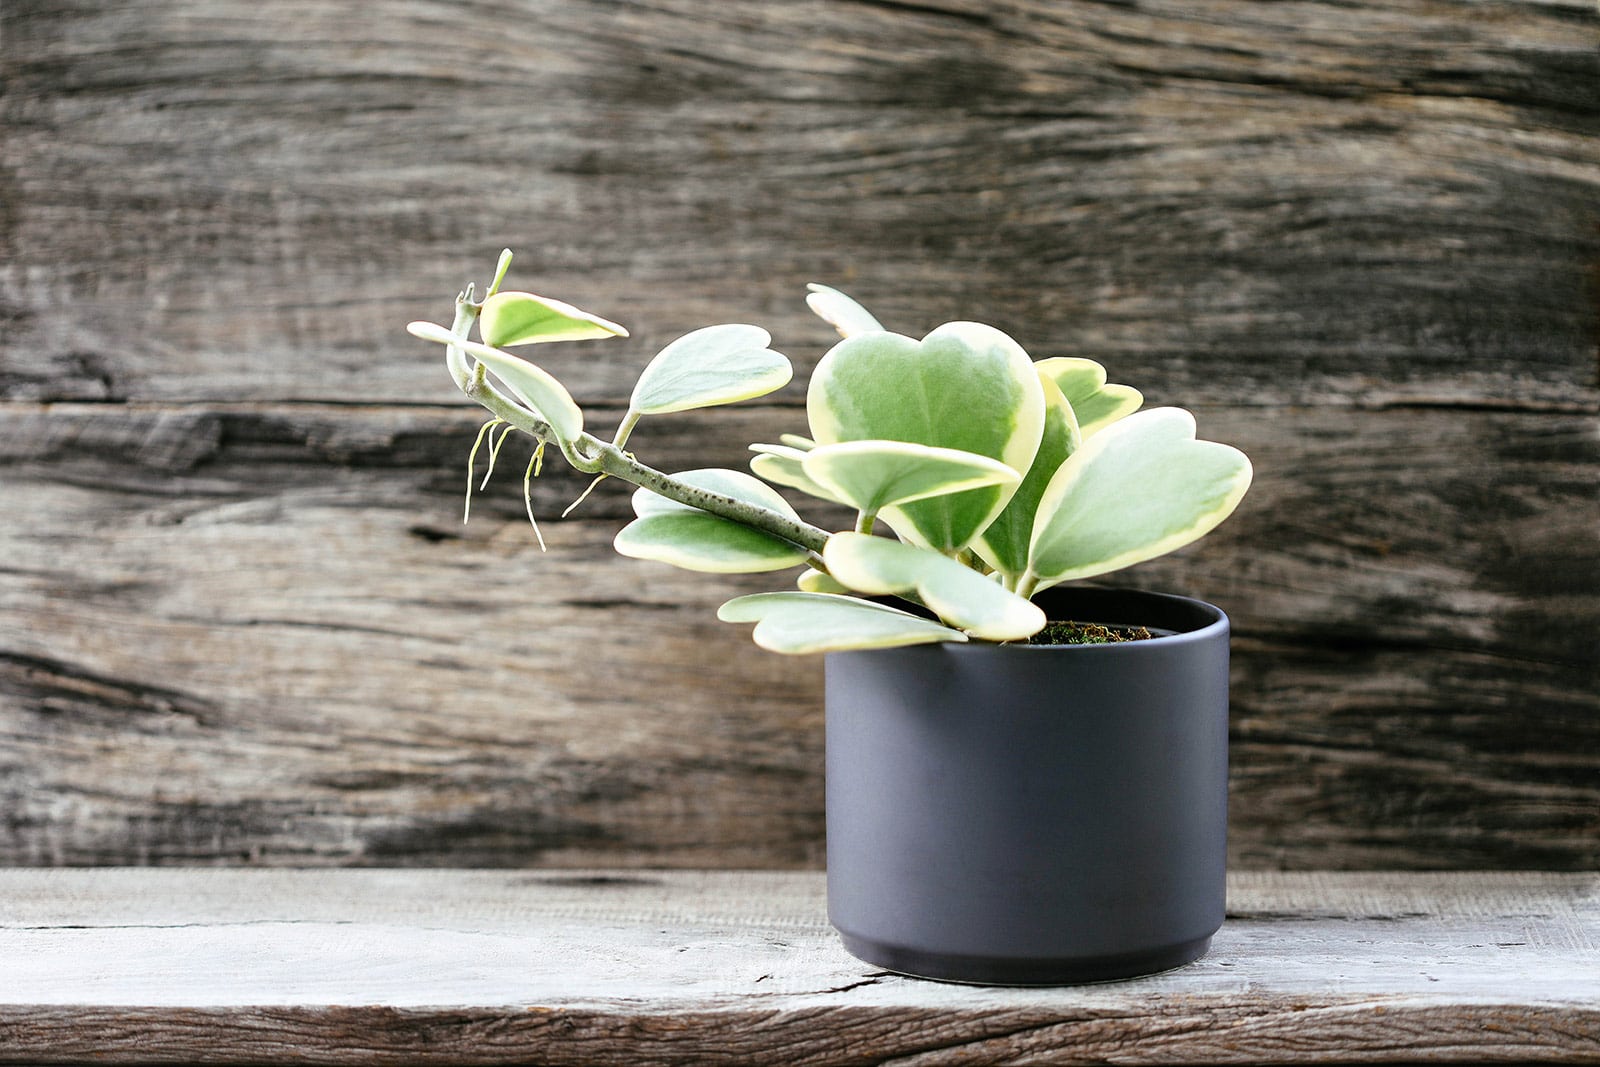 Hoya kerrii (sweetheart Hoya) plant in a modern black pot set on a rustic wooden surface against a dark wood background